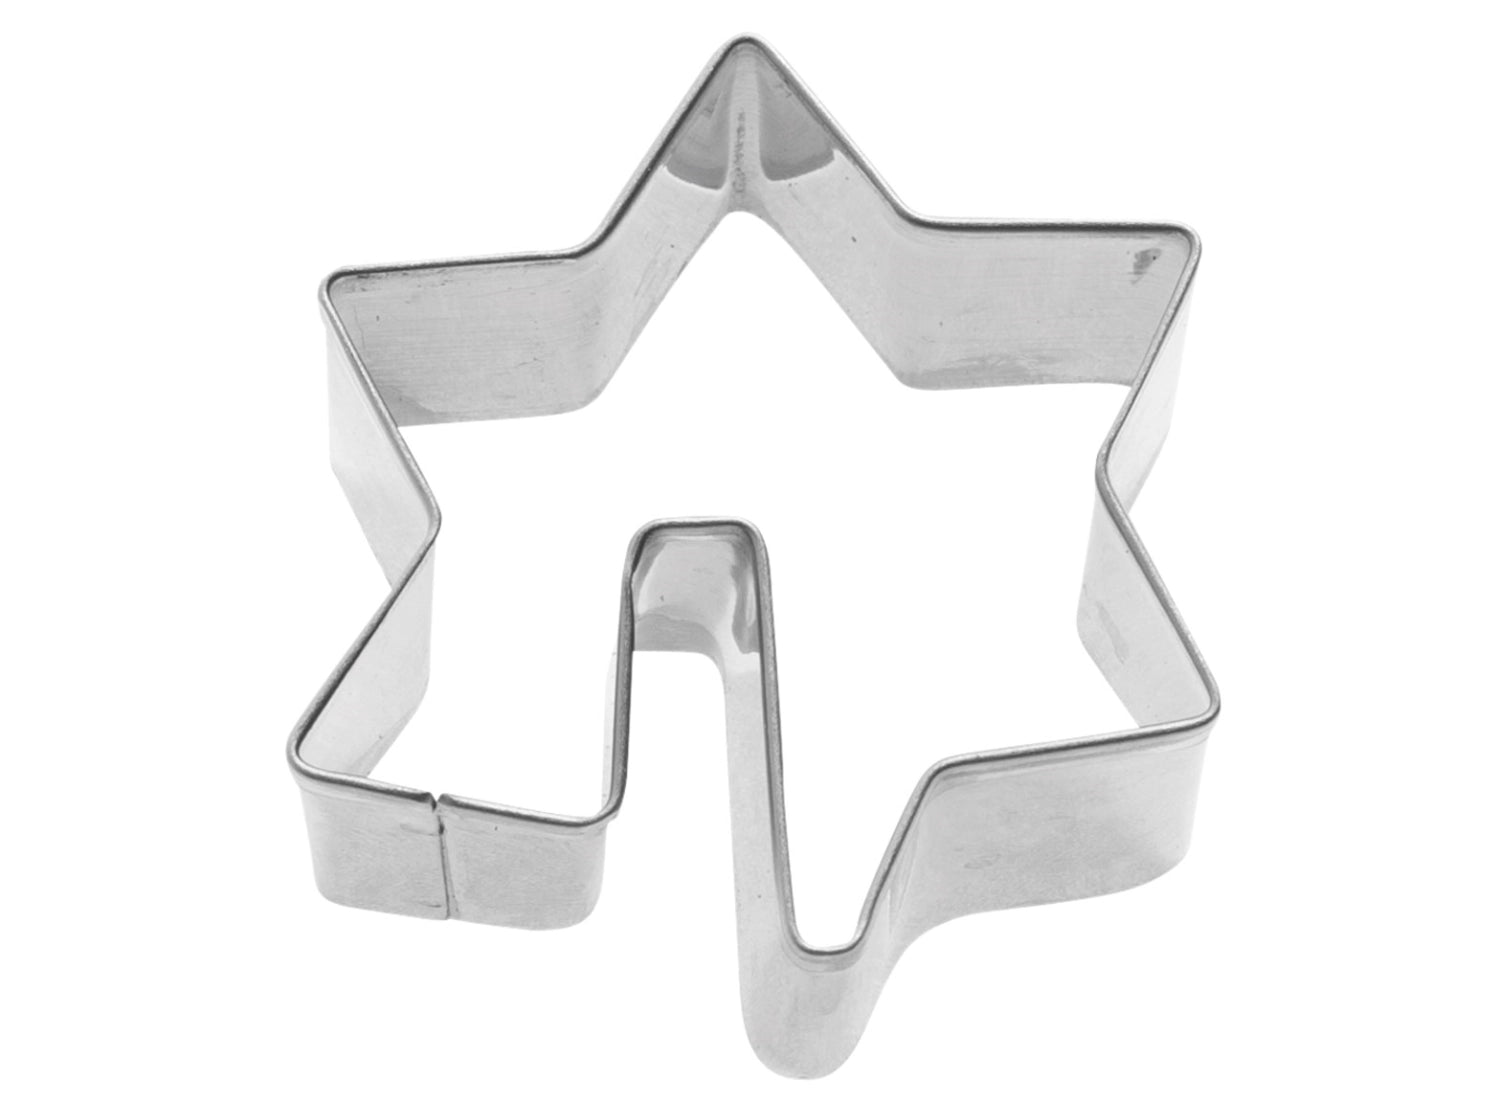 Tassenkeks-Ausstechform Stern, 5cm - KAQTU Design